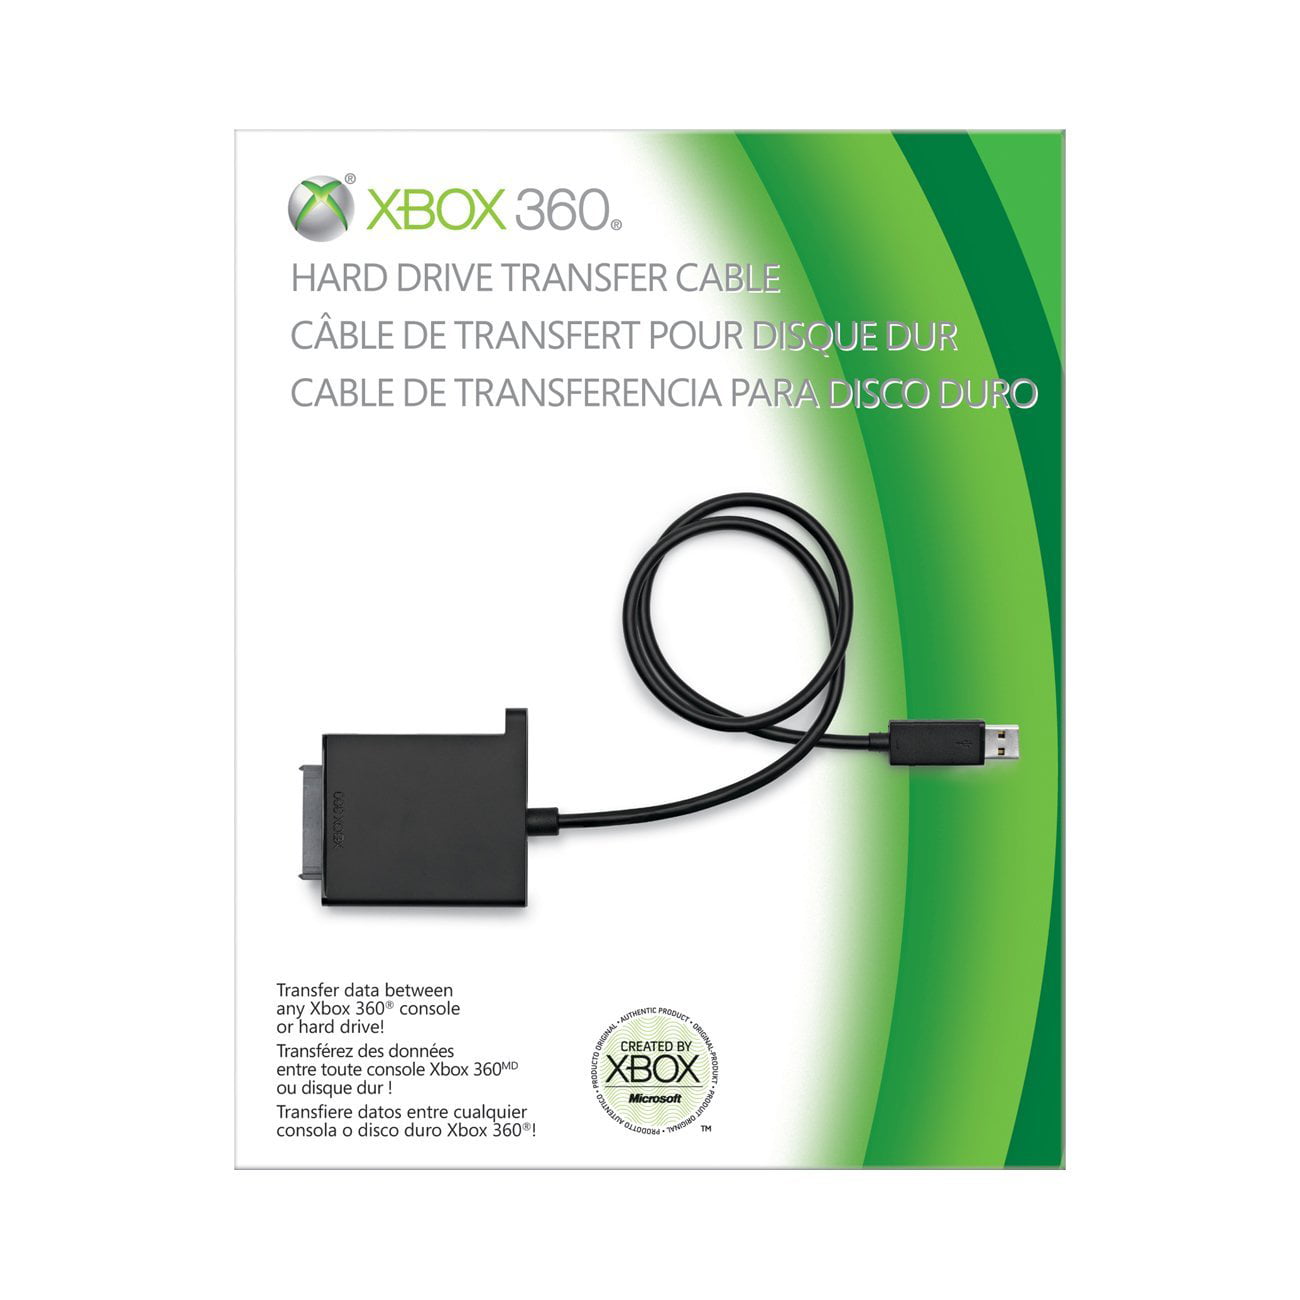 Consejo cubrir bronce Xbox 360 Hard Drive Transfer Cable - Walmart.com